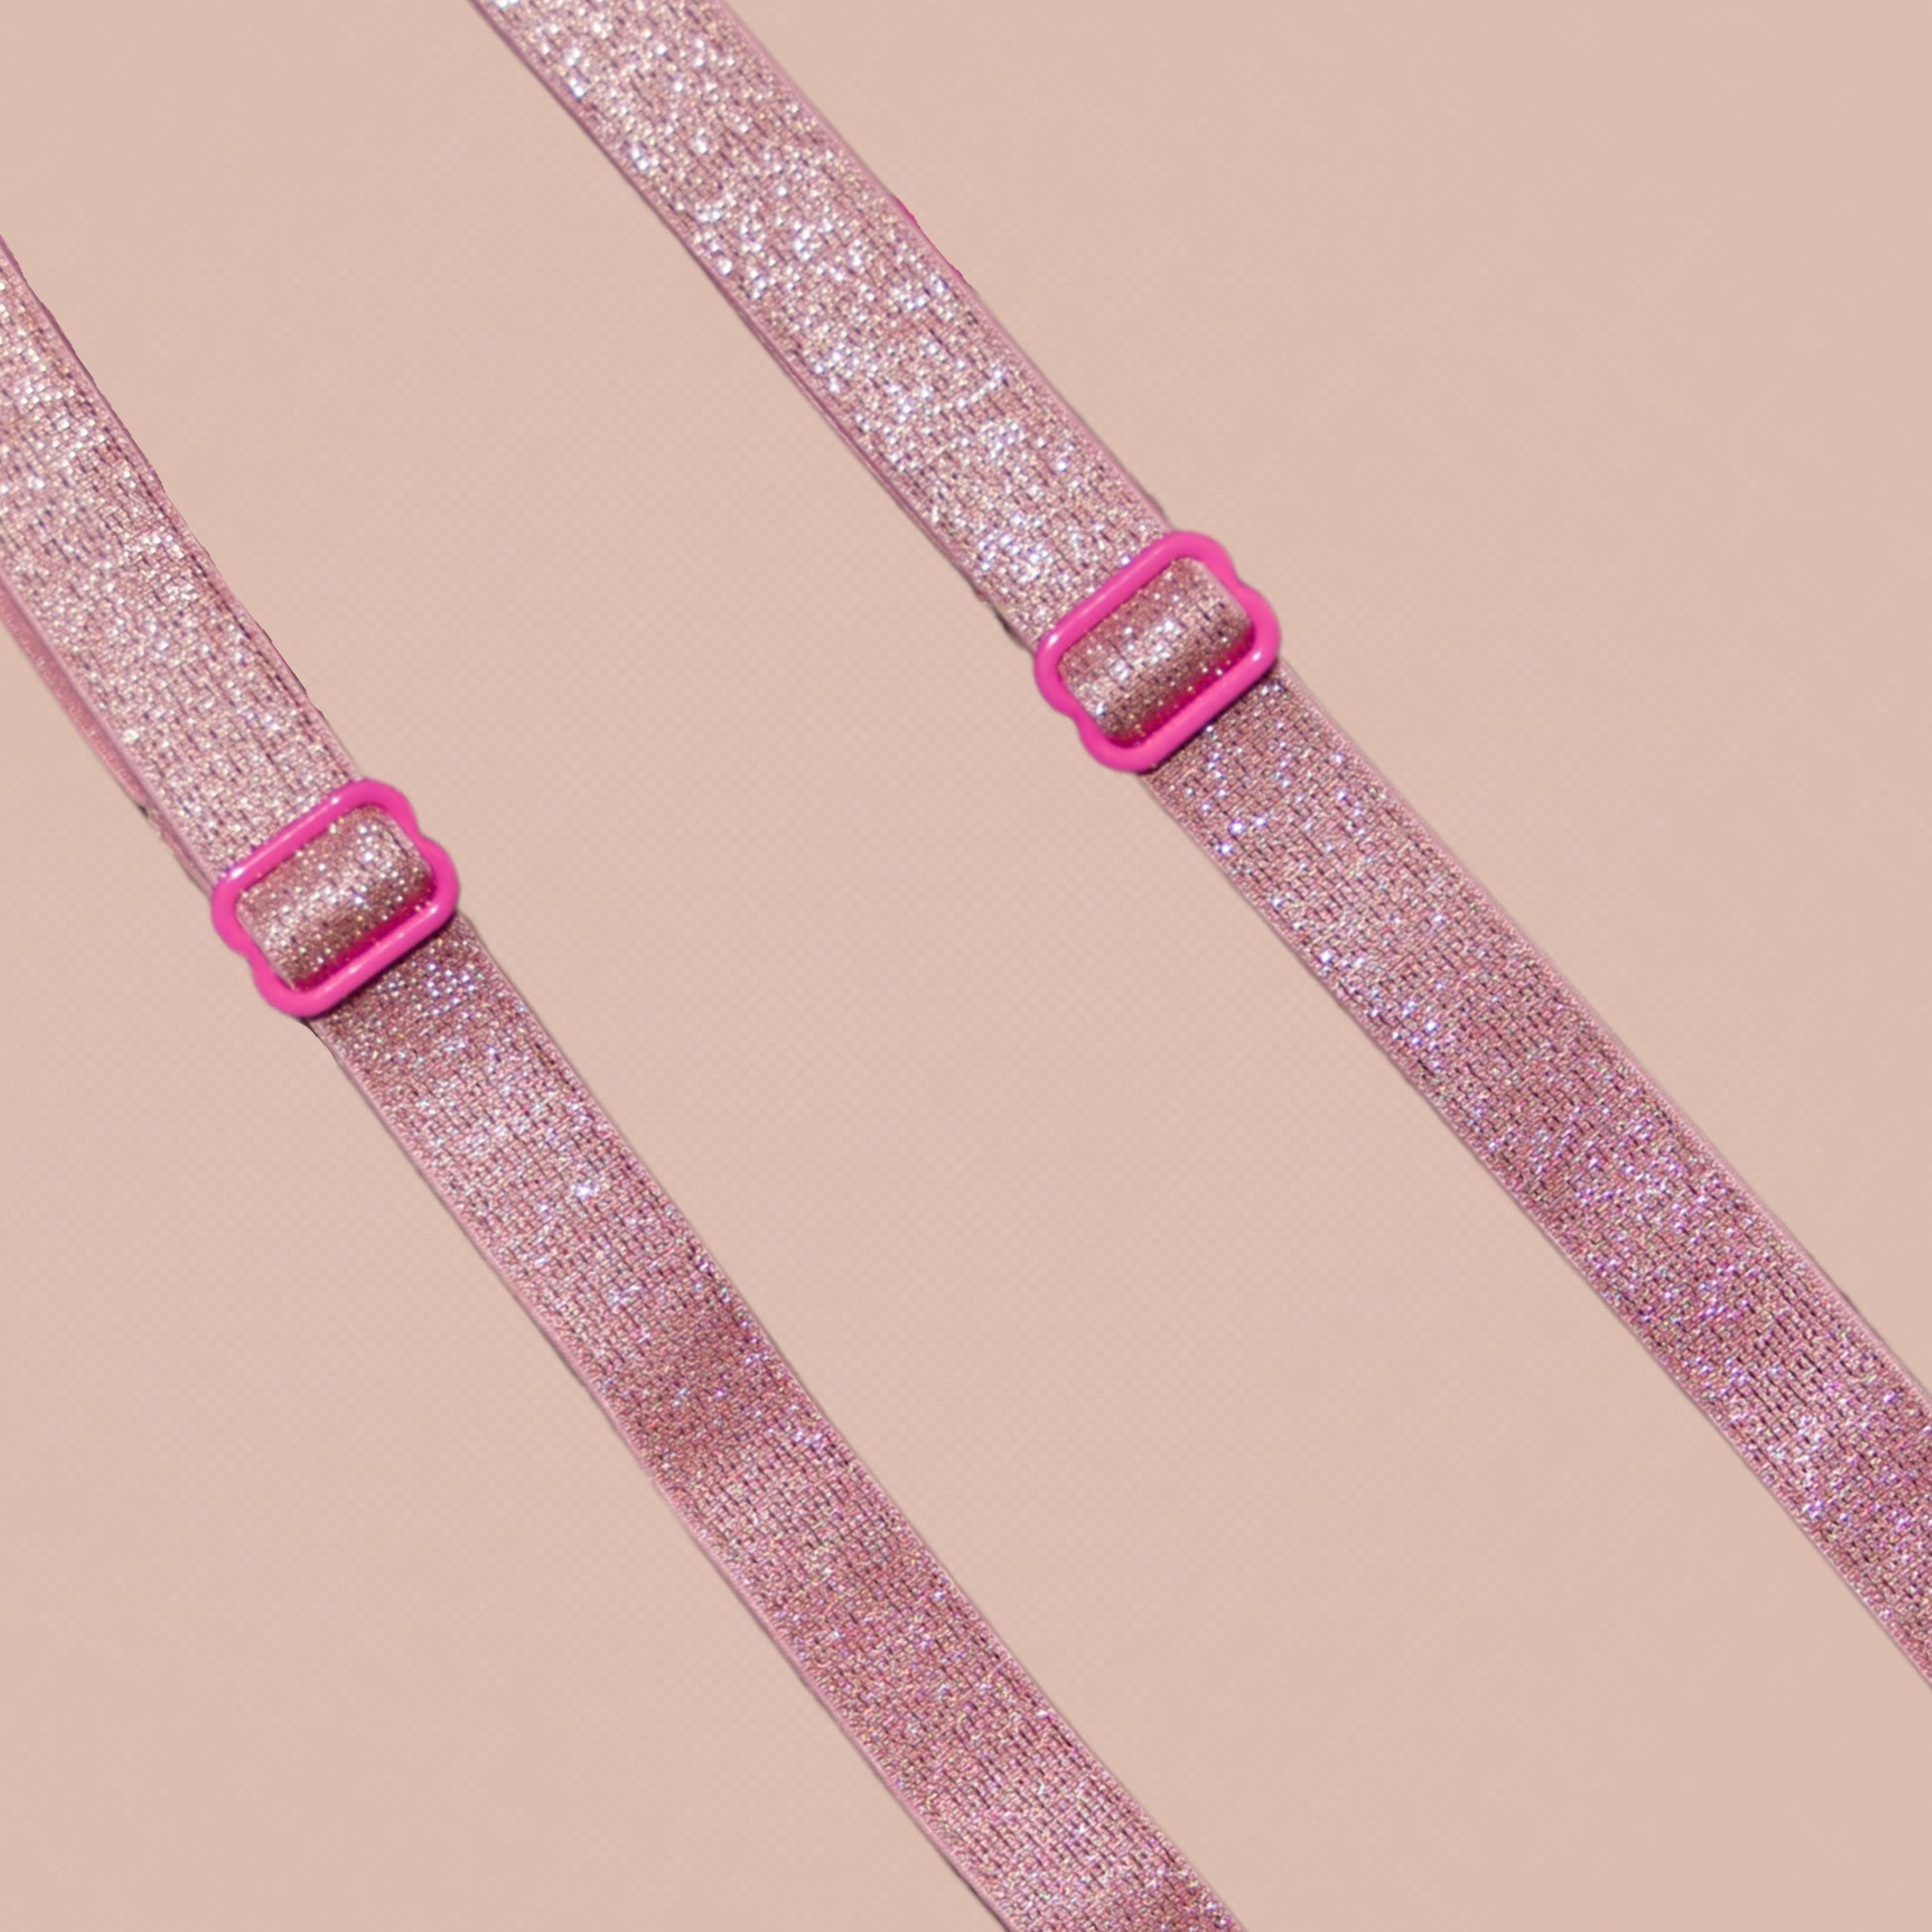 Set of Metallic interchangeable her-rah Straps in Princess Pink..